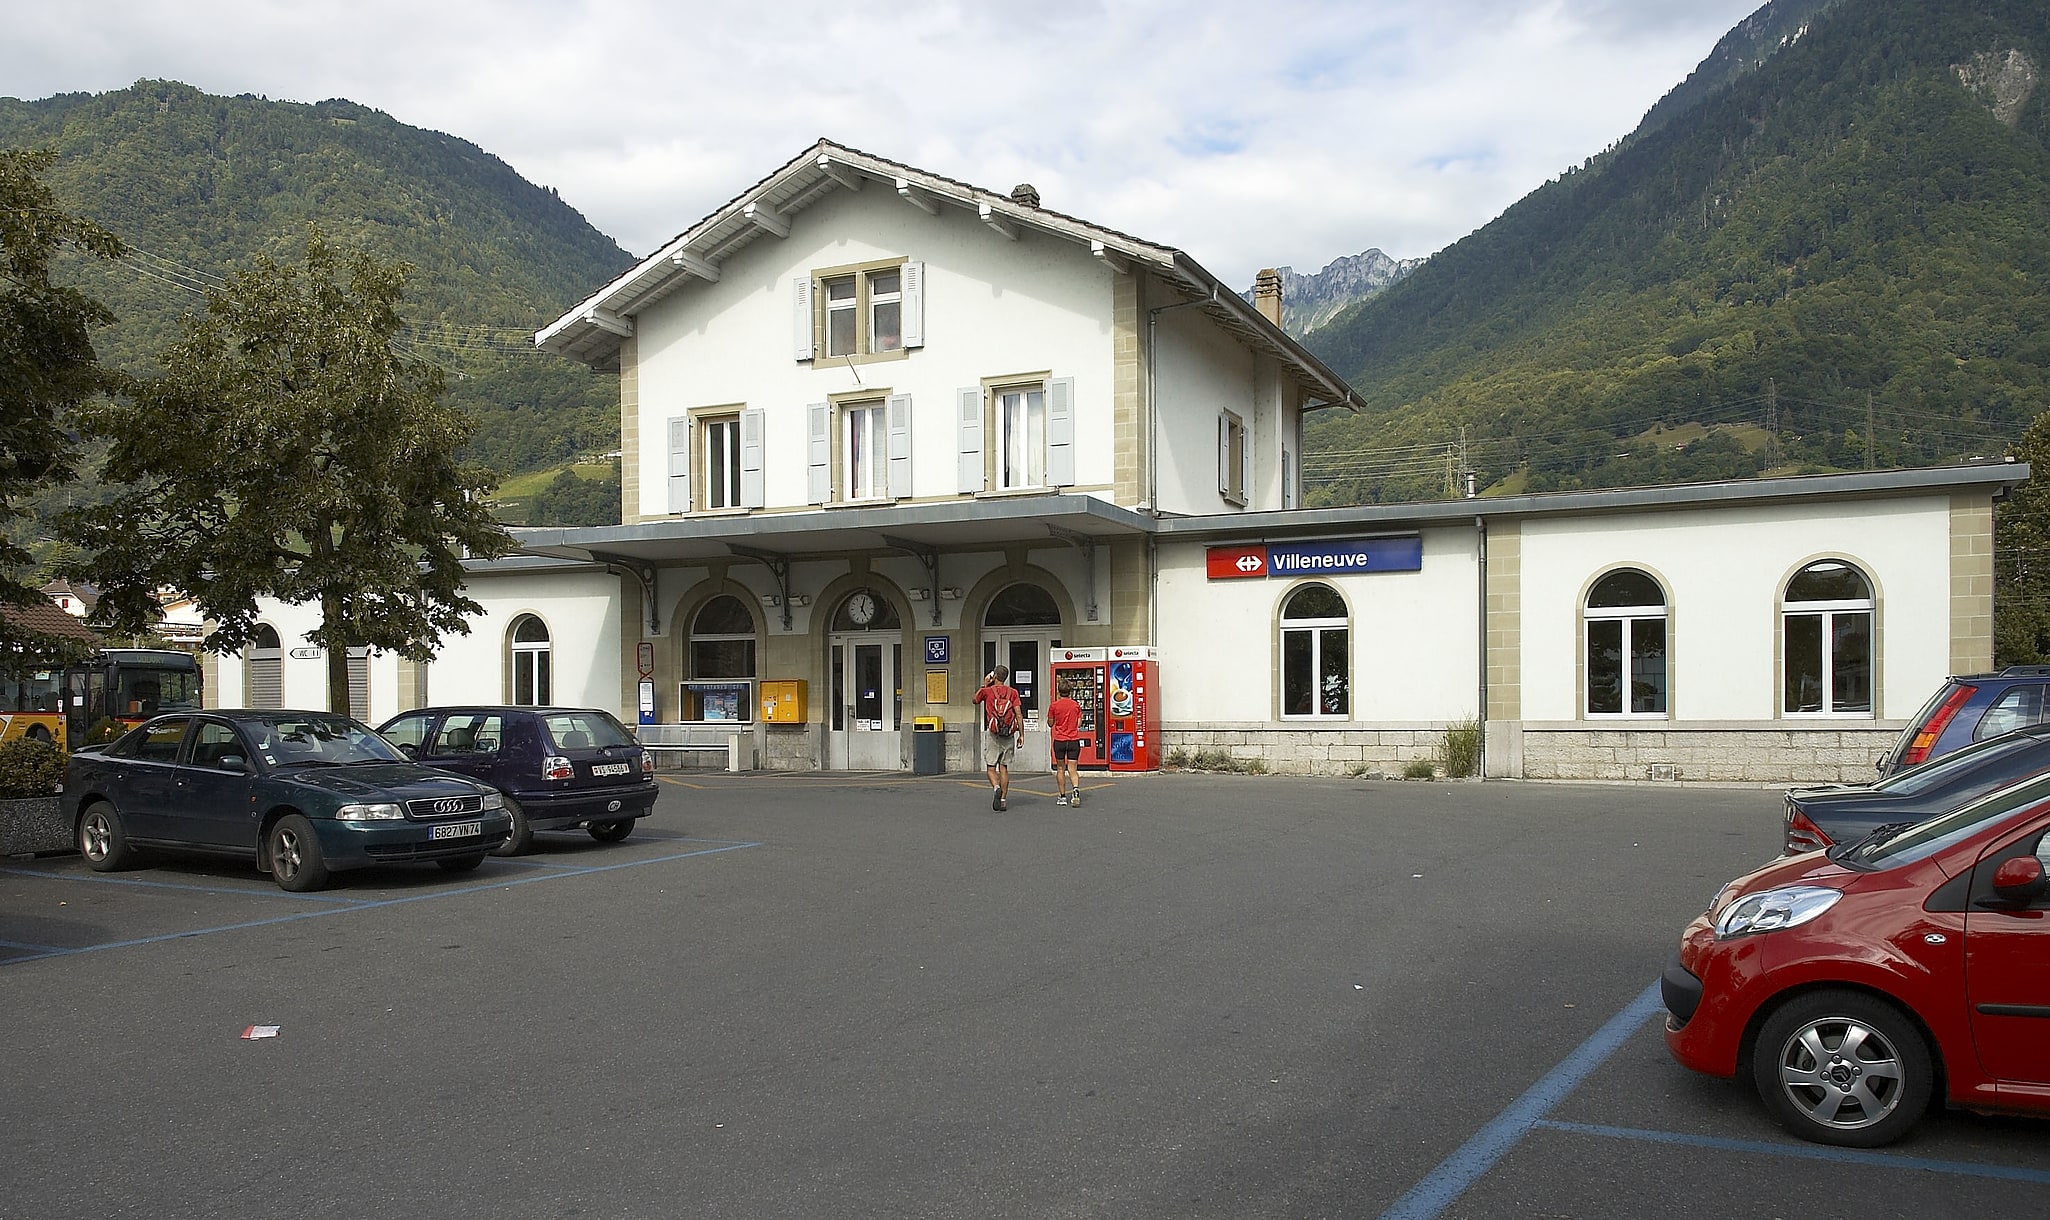 Villeneuve, Szwajcaria